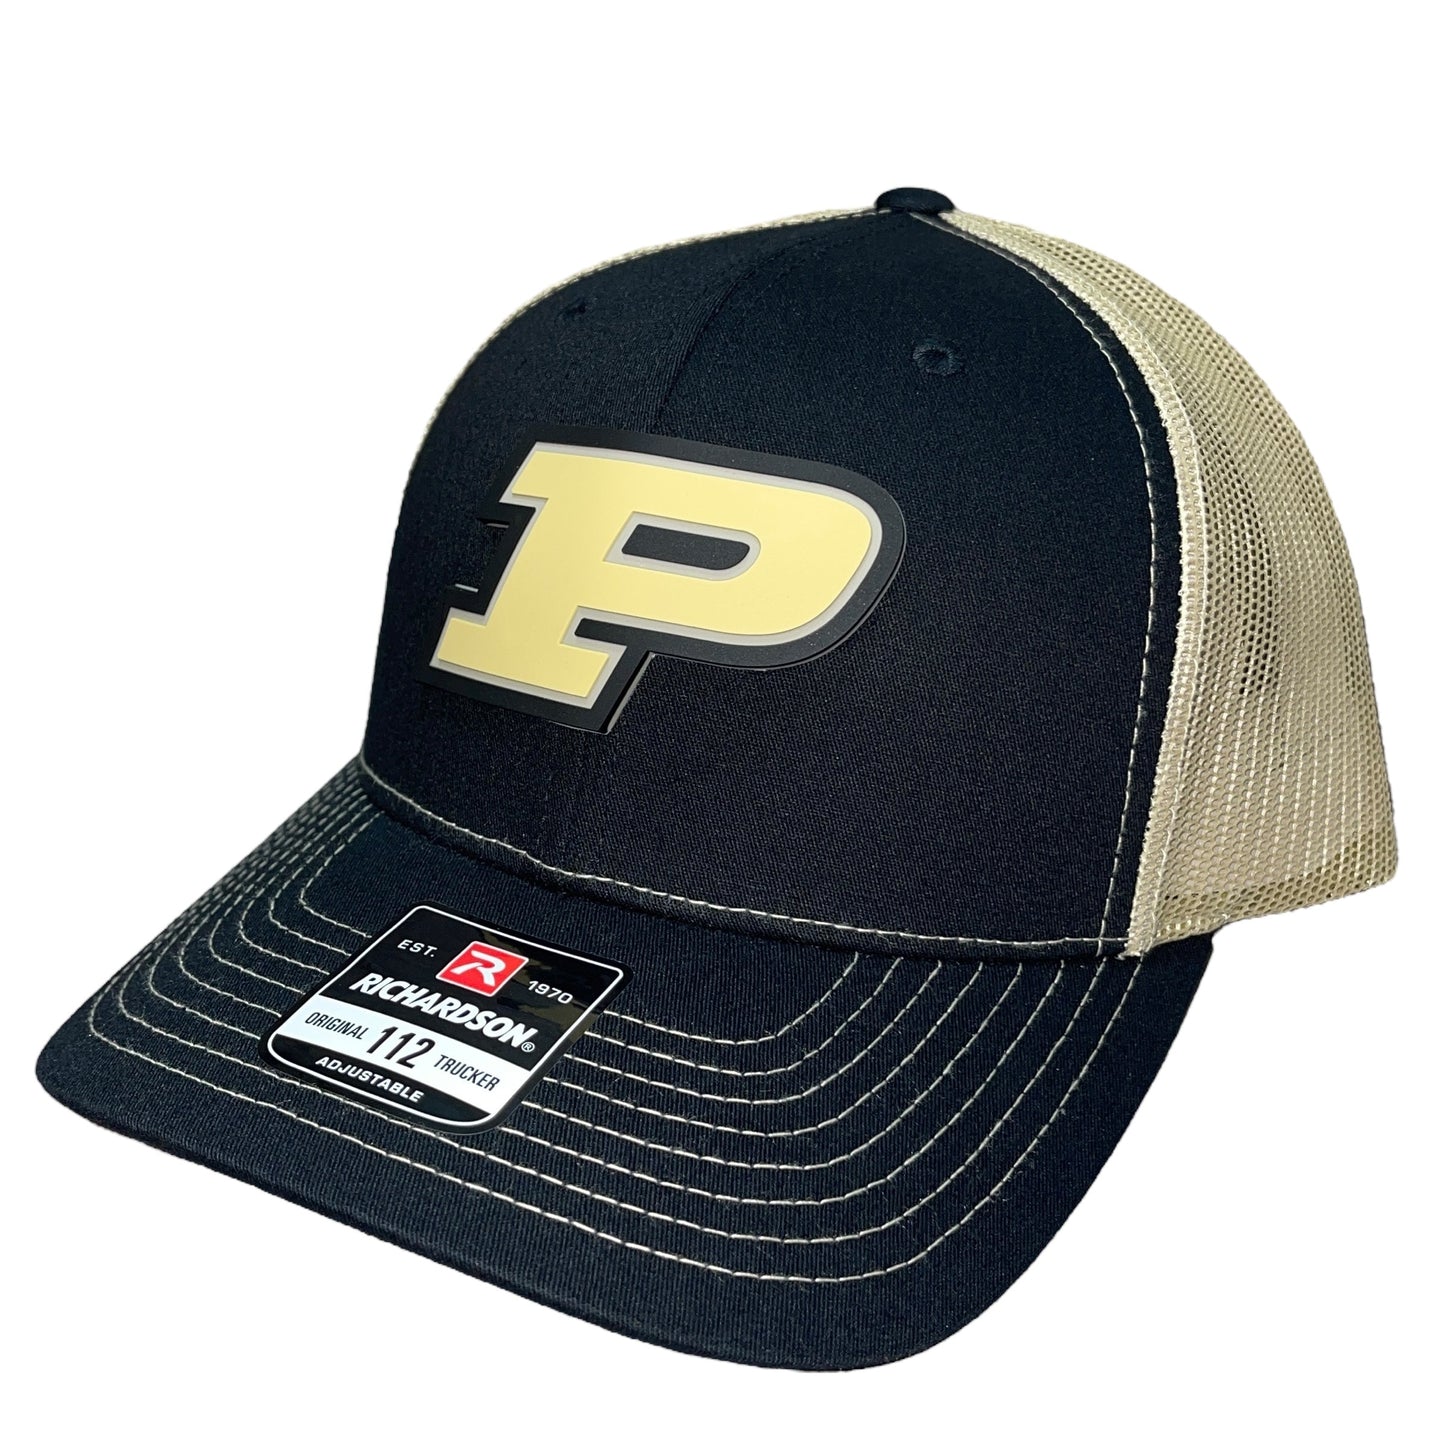 Purdue Boilermakers 3D Snapback Trucker Hat- Black/ Vegas Gold - Ten Gallon Hat Co.